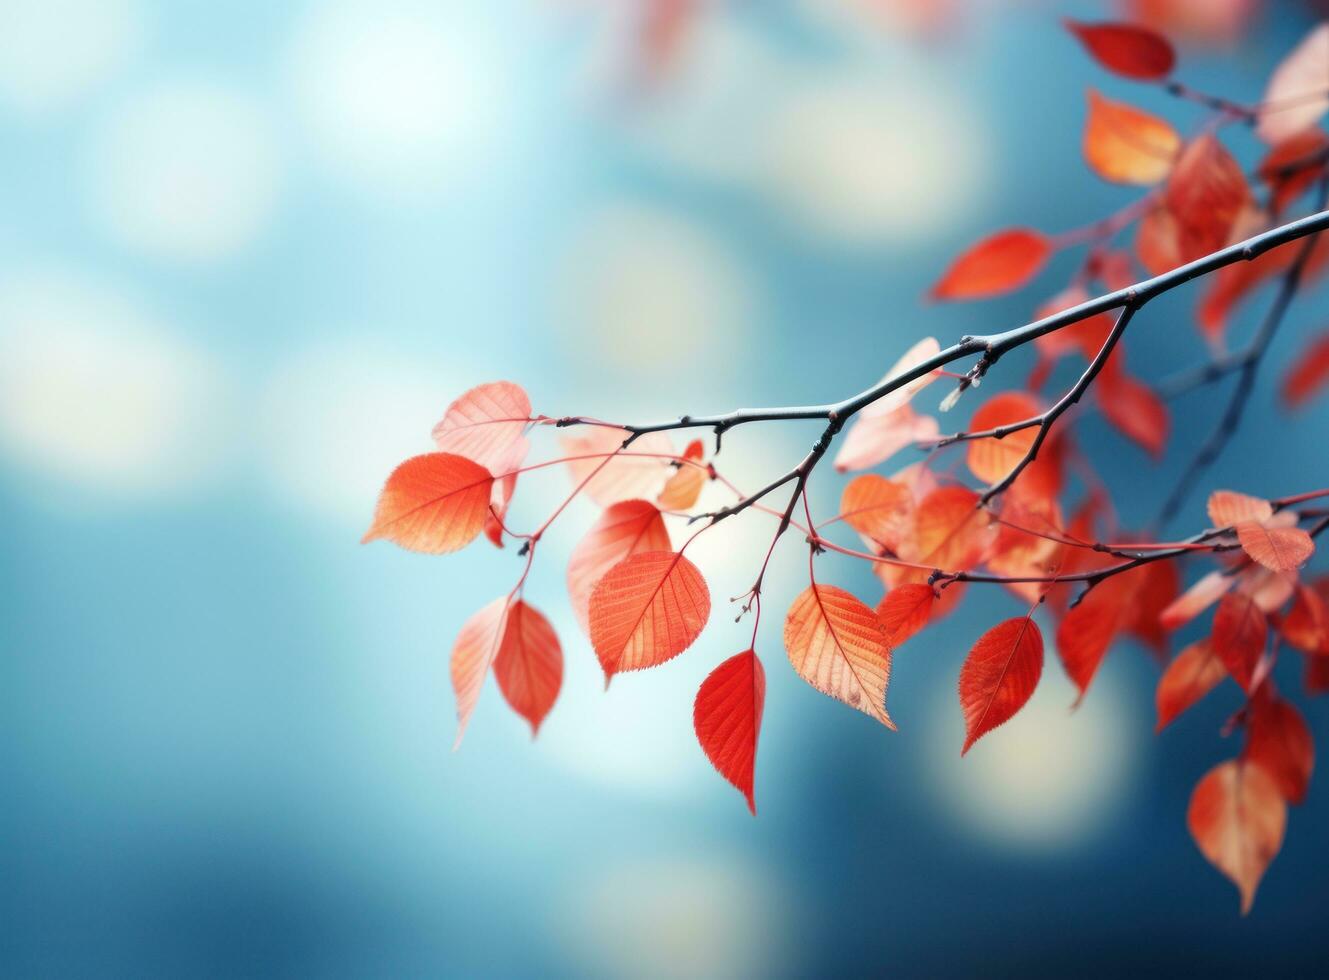 Autumn leaves on blue sky background photo